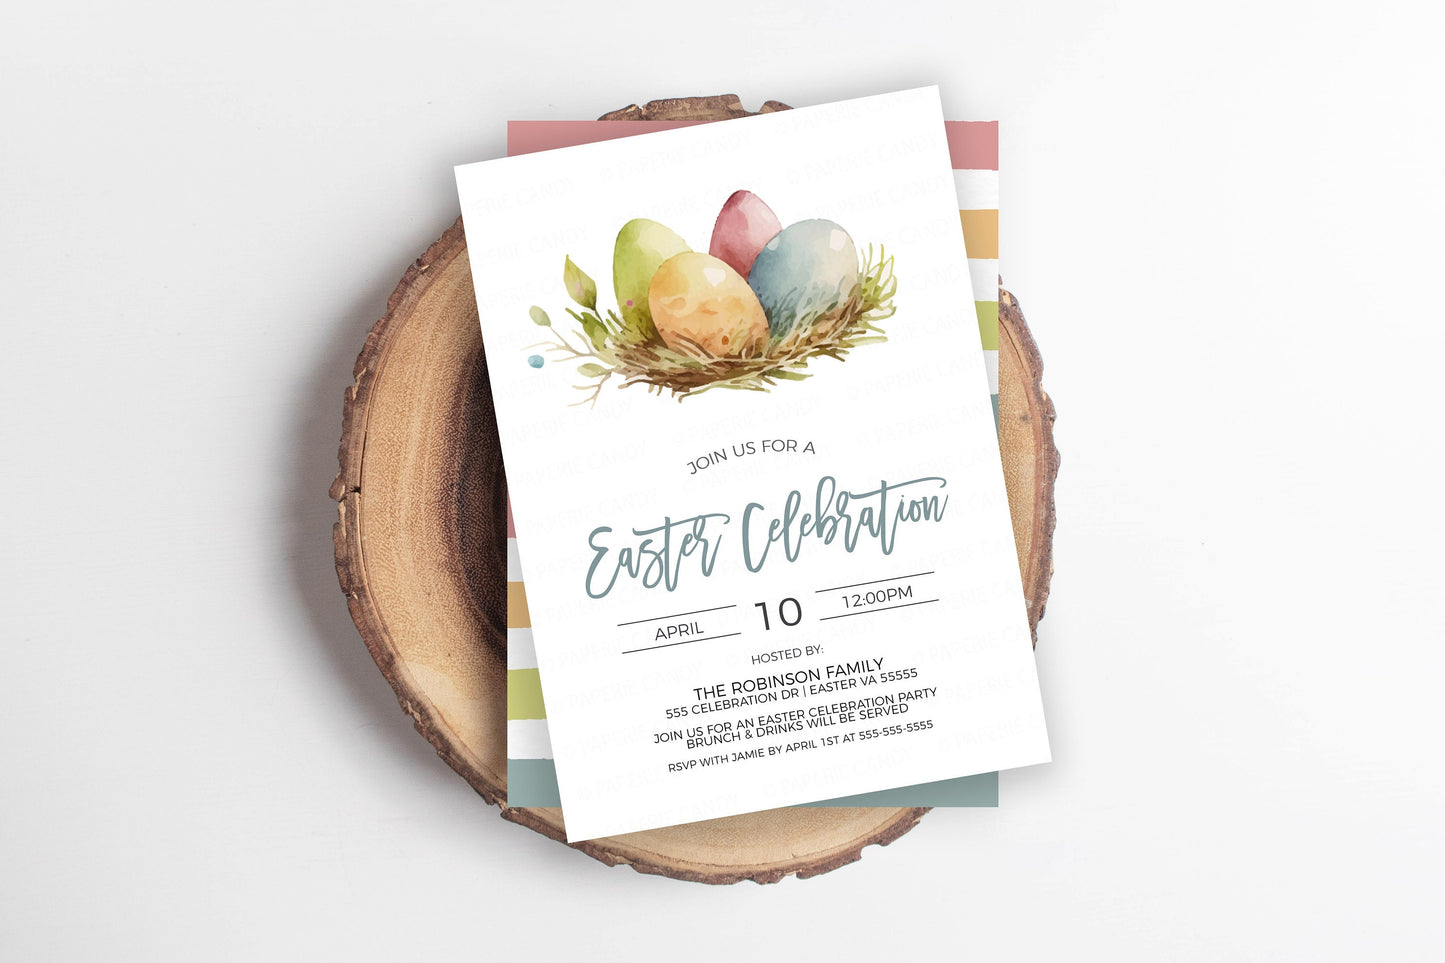 Easter Celebration Invitation, Easter Party Invite, Breakfast Brunch Lunch Dinner Party, Good Friday Event, Egg Hunt, Editable Printable